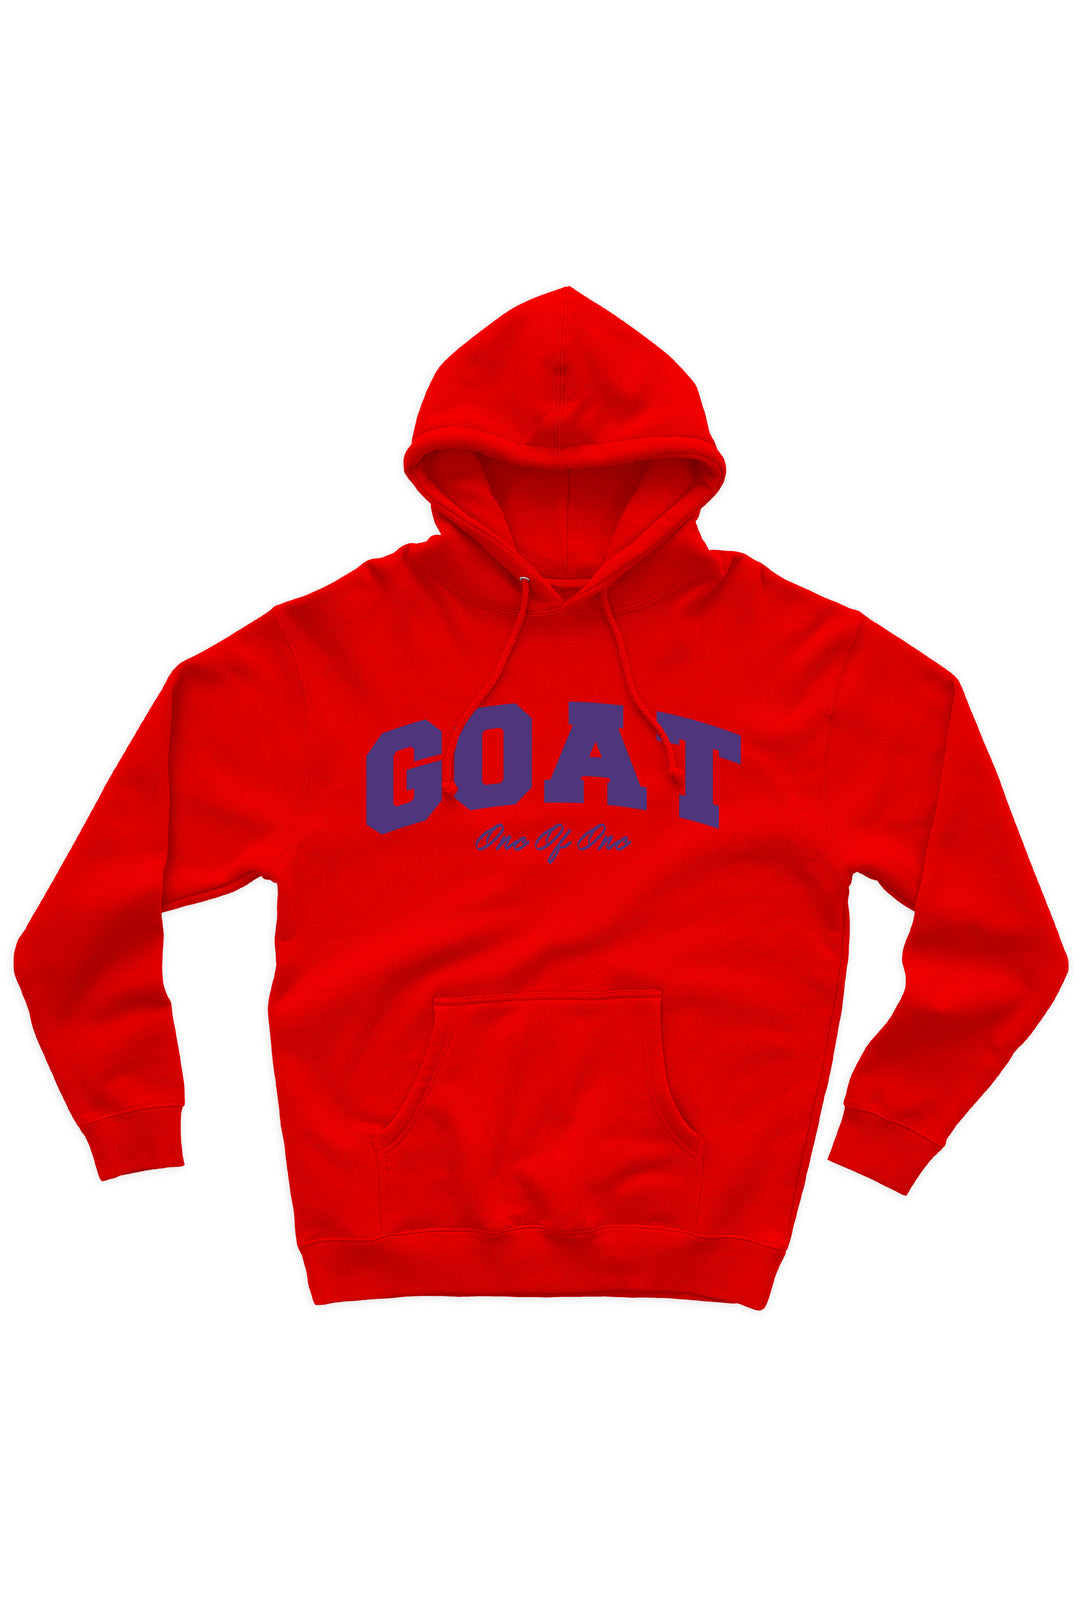 Goat Hoodie (Purple Logo) - Zamage